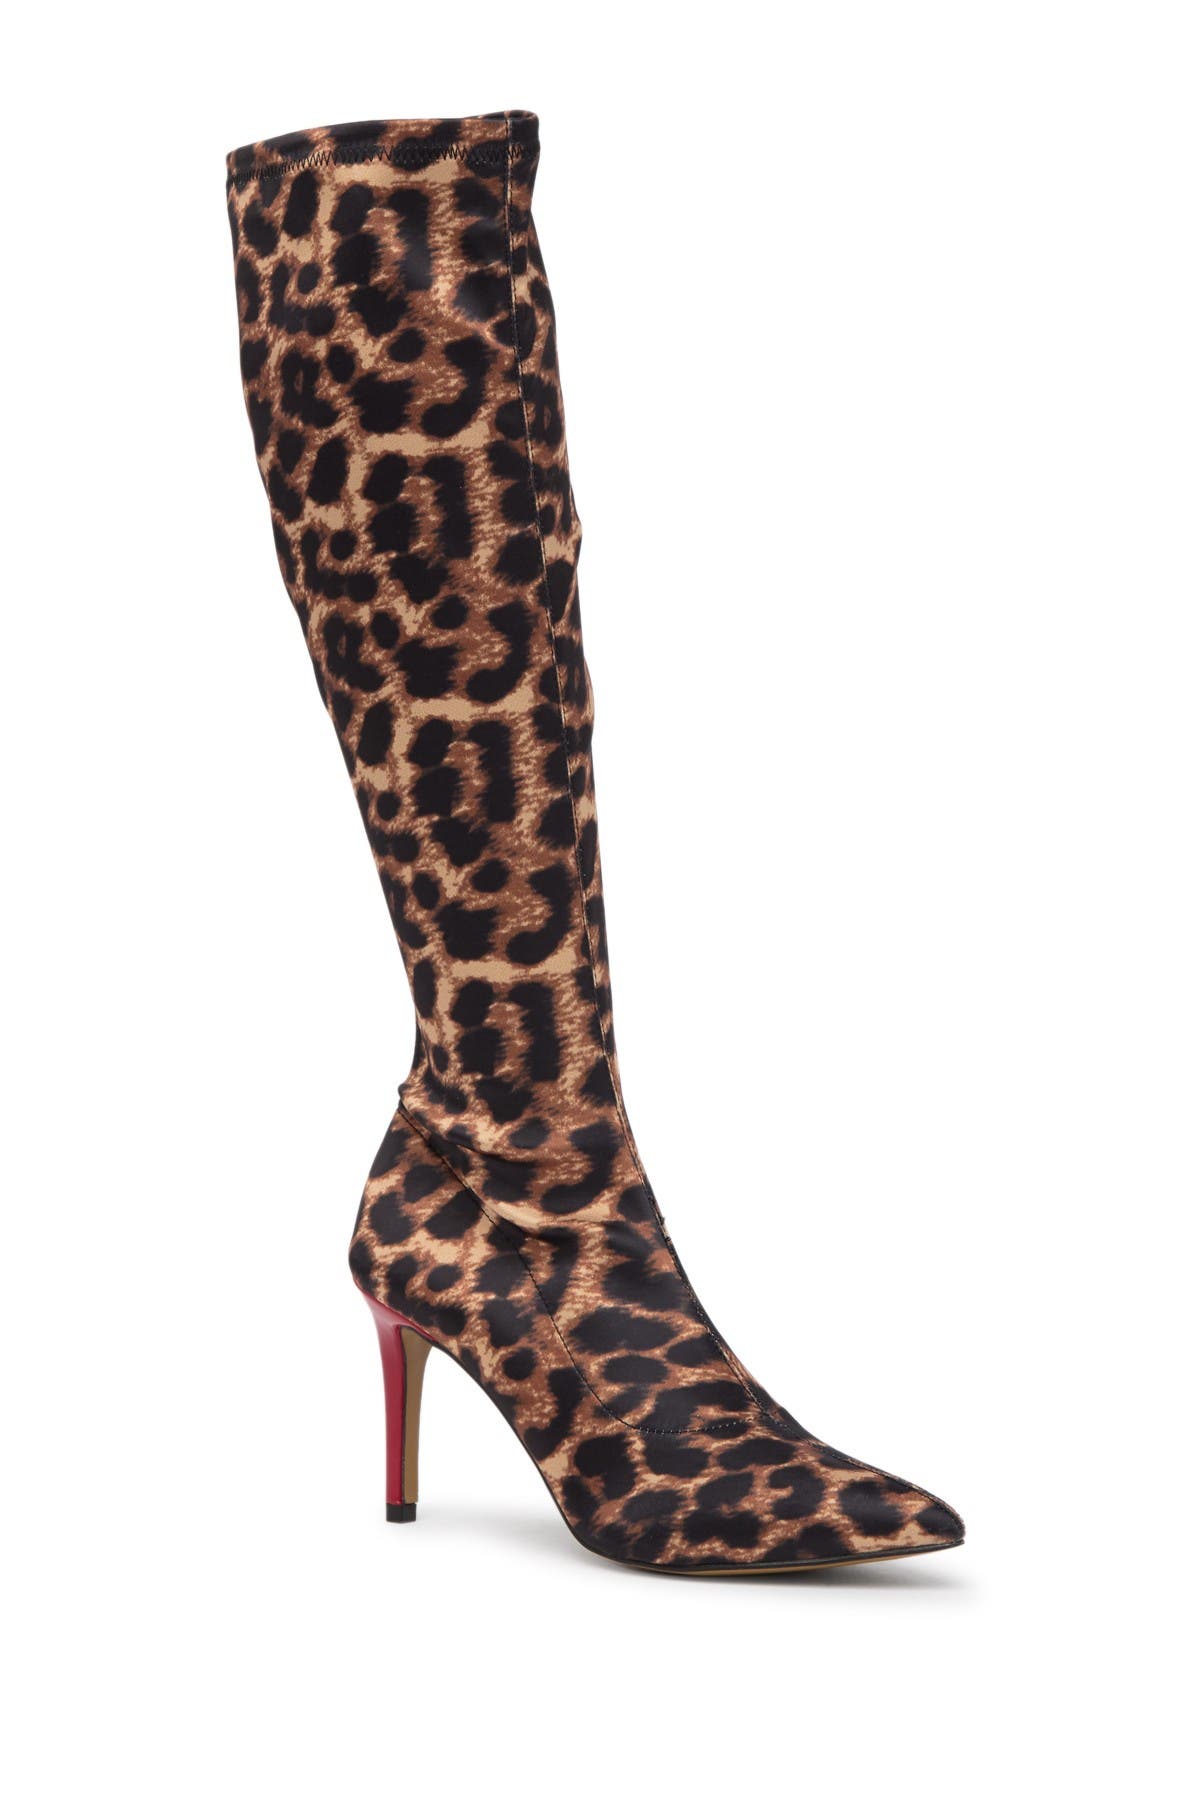 betsey johnson leopard boots